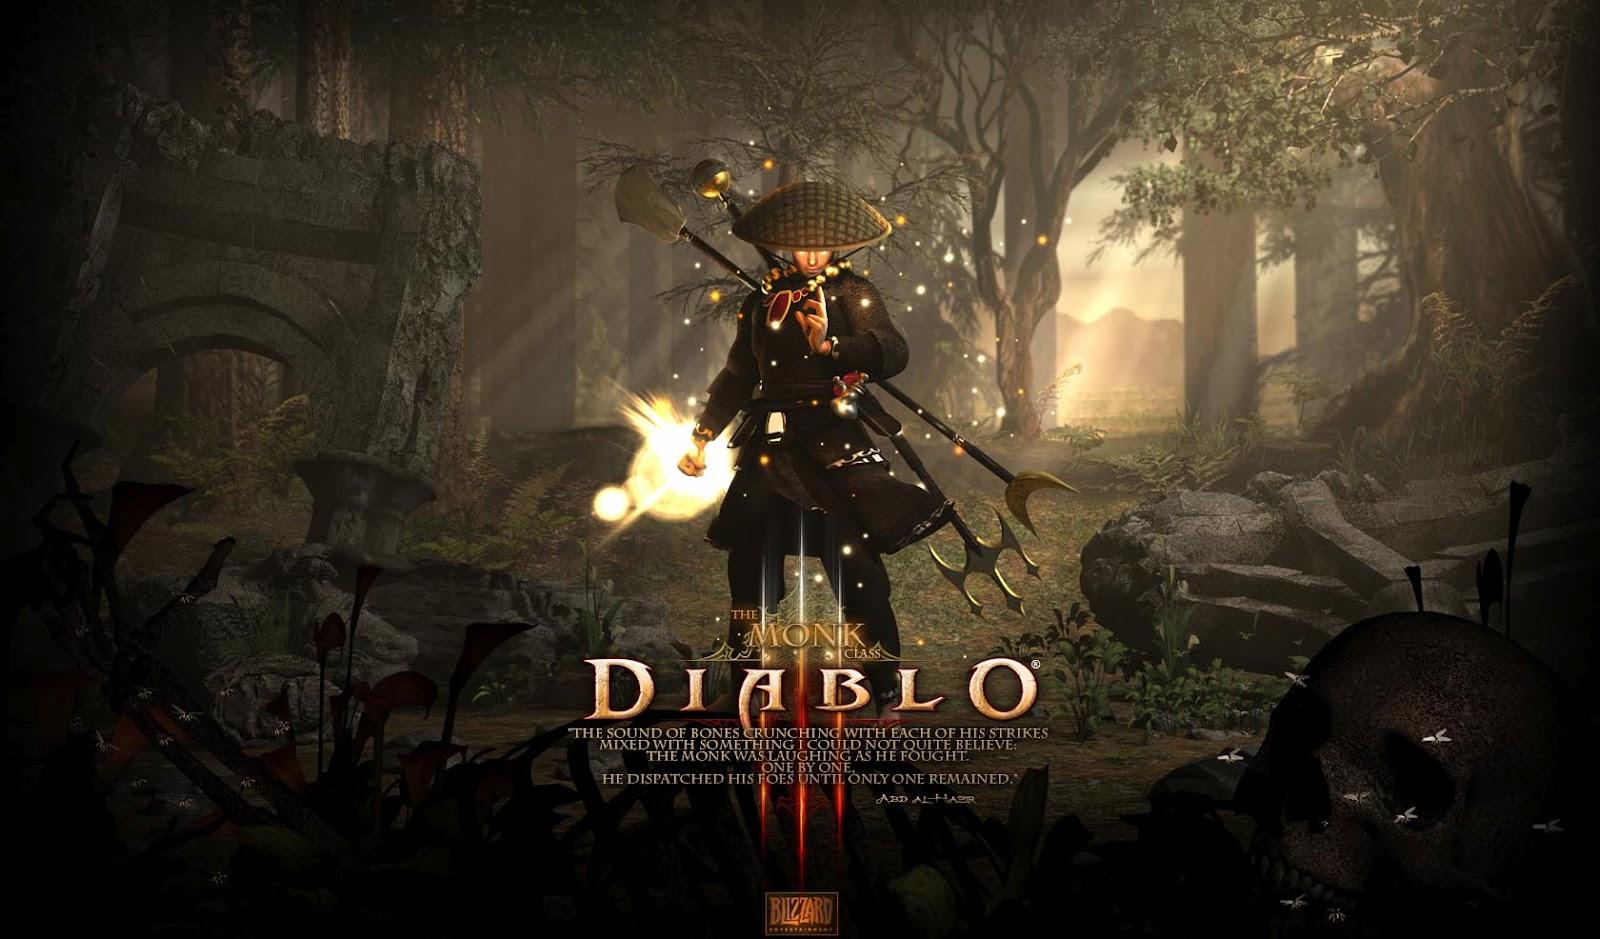 Diablo II HD Wallpaper and Background Image